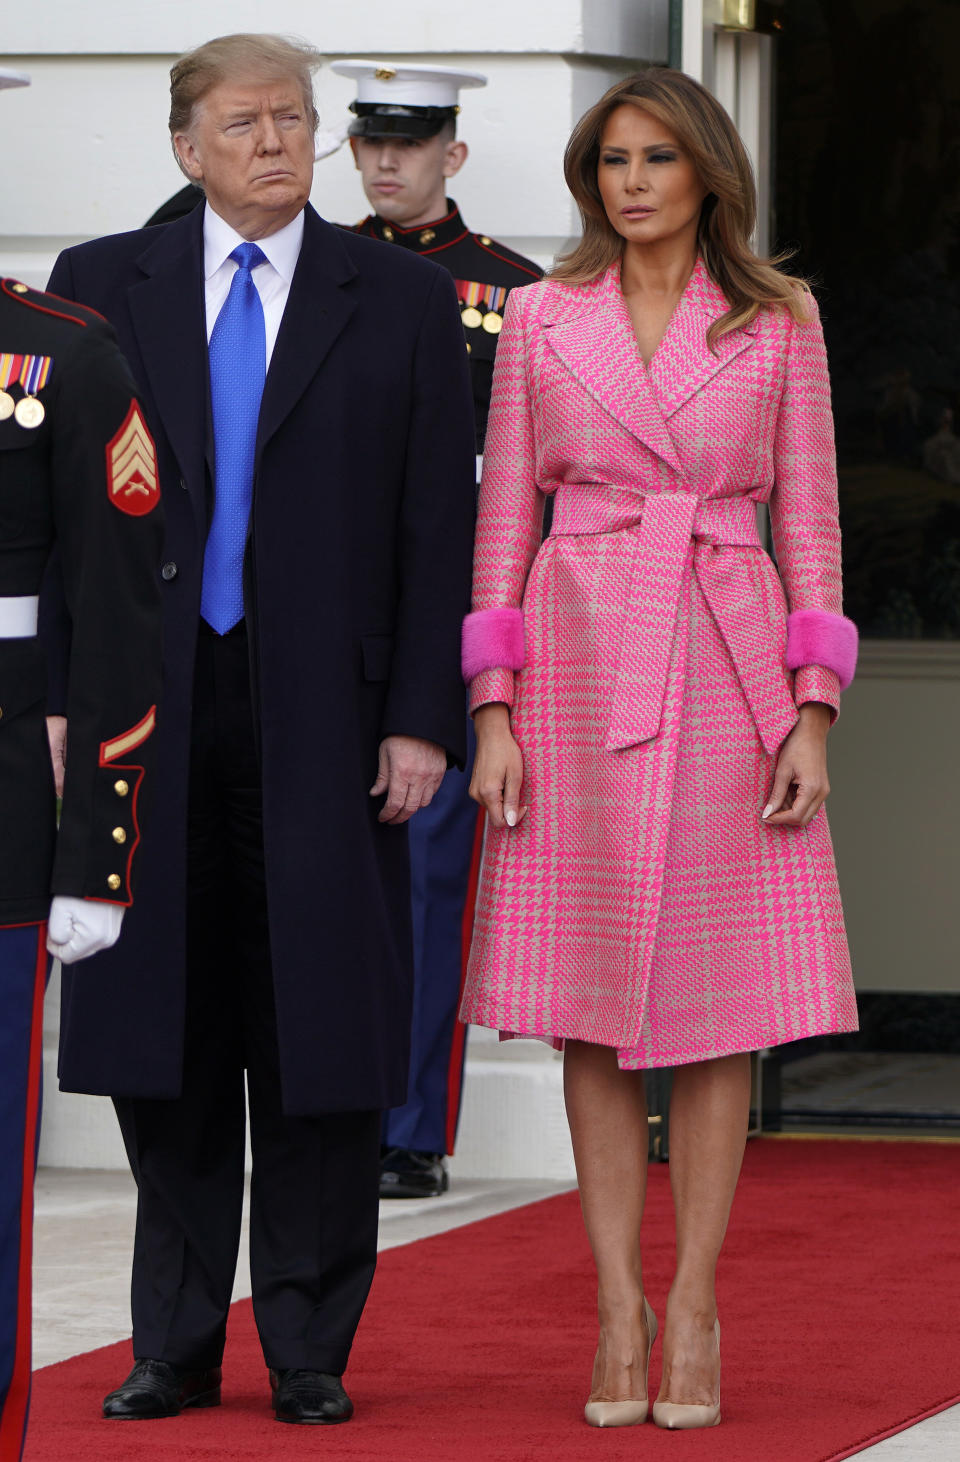 Melania Trump’s Fendi coat has been compared to a ‘bathrobe’. Source: Getty